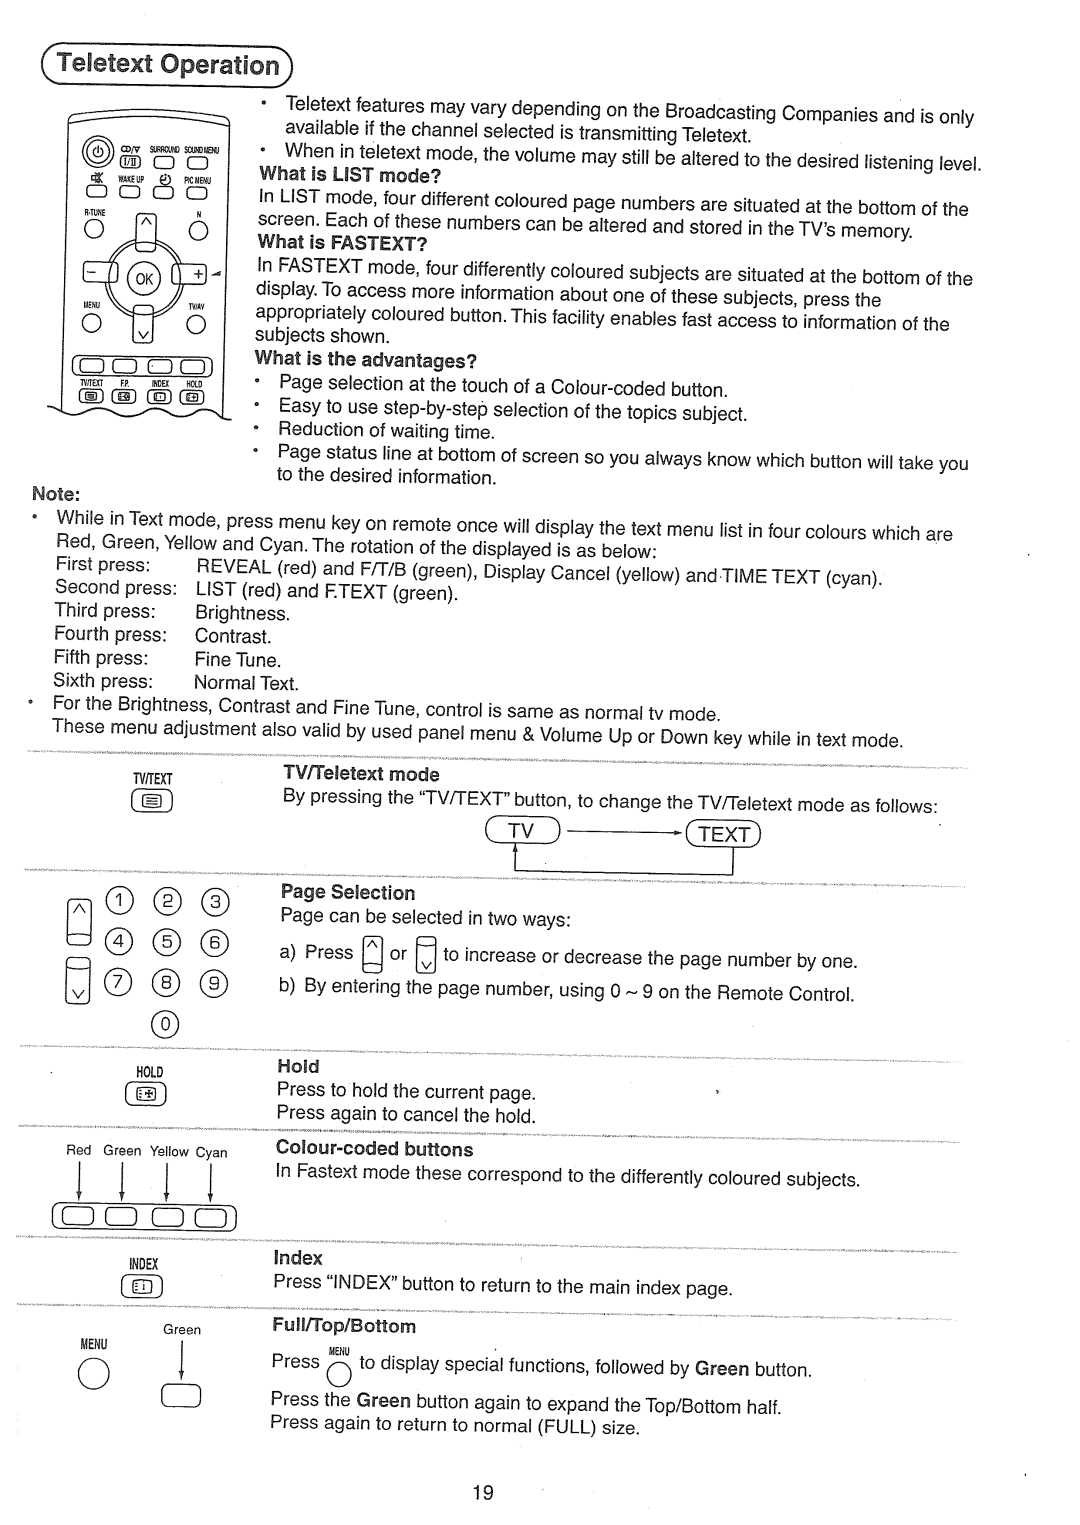 Panasonic TX-21FS10A manual 